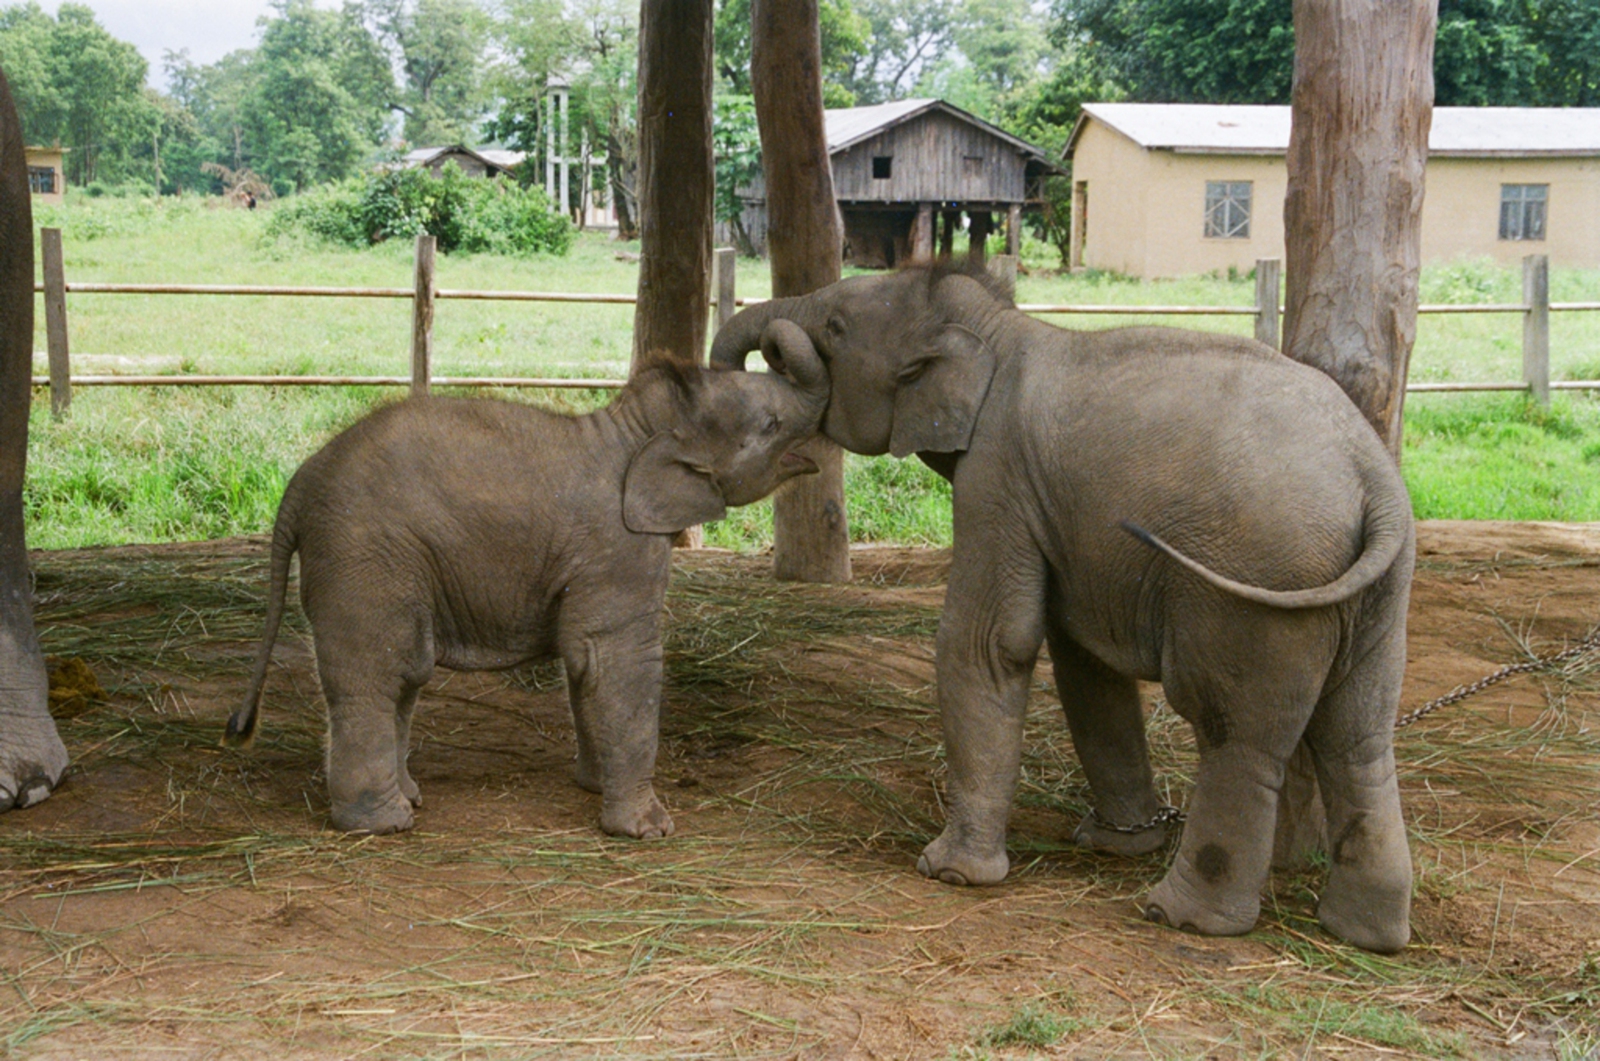 Chitwan nationaal park: Jonge olifanten